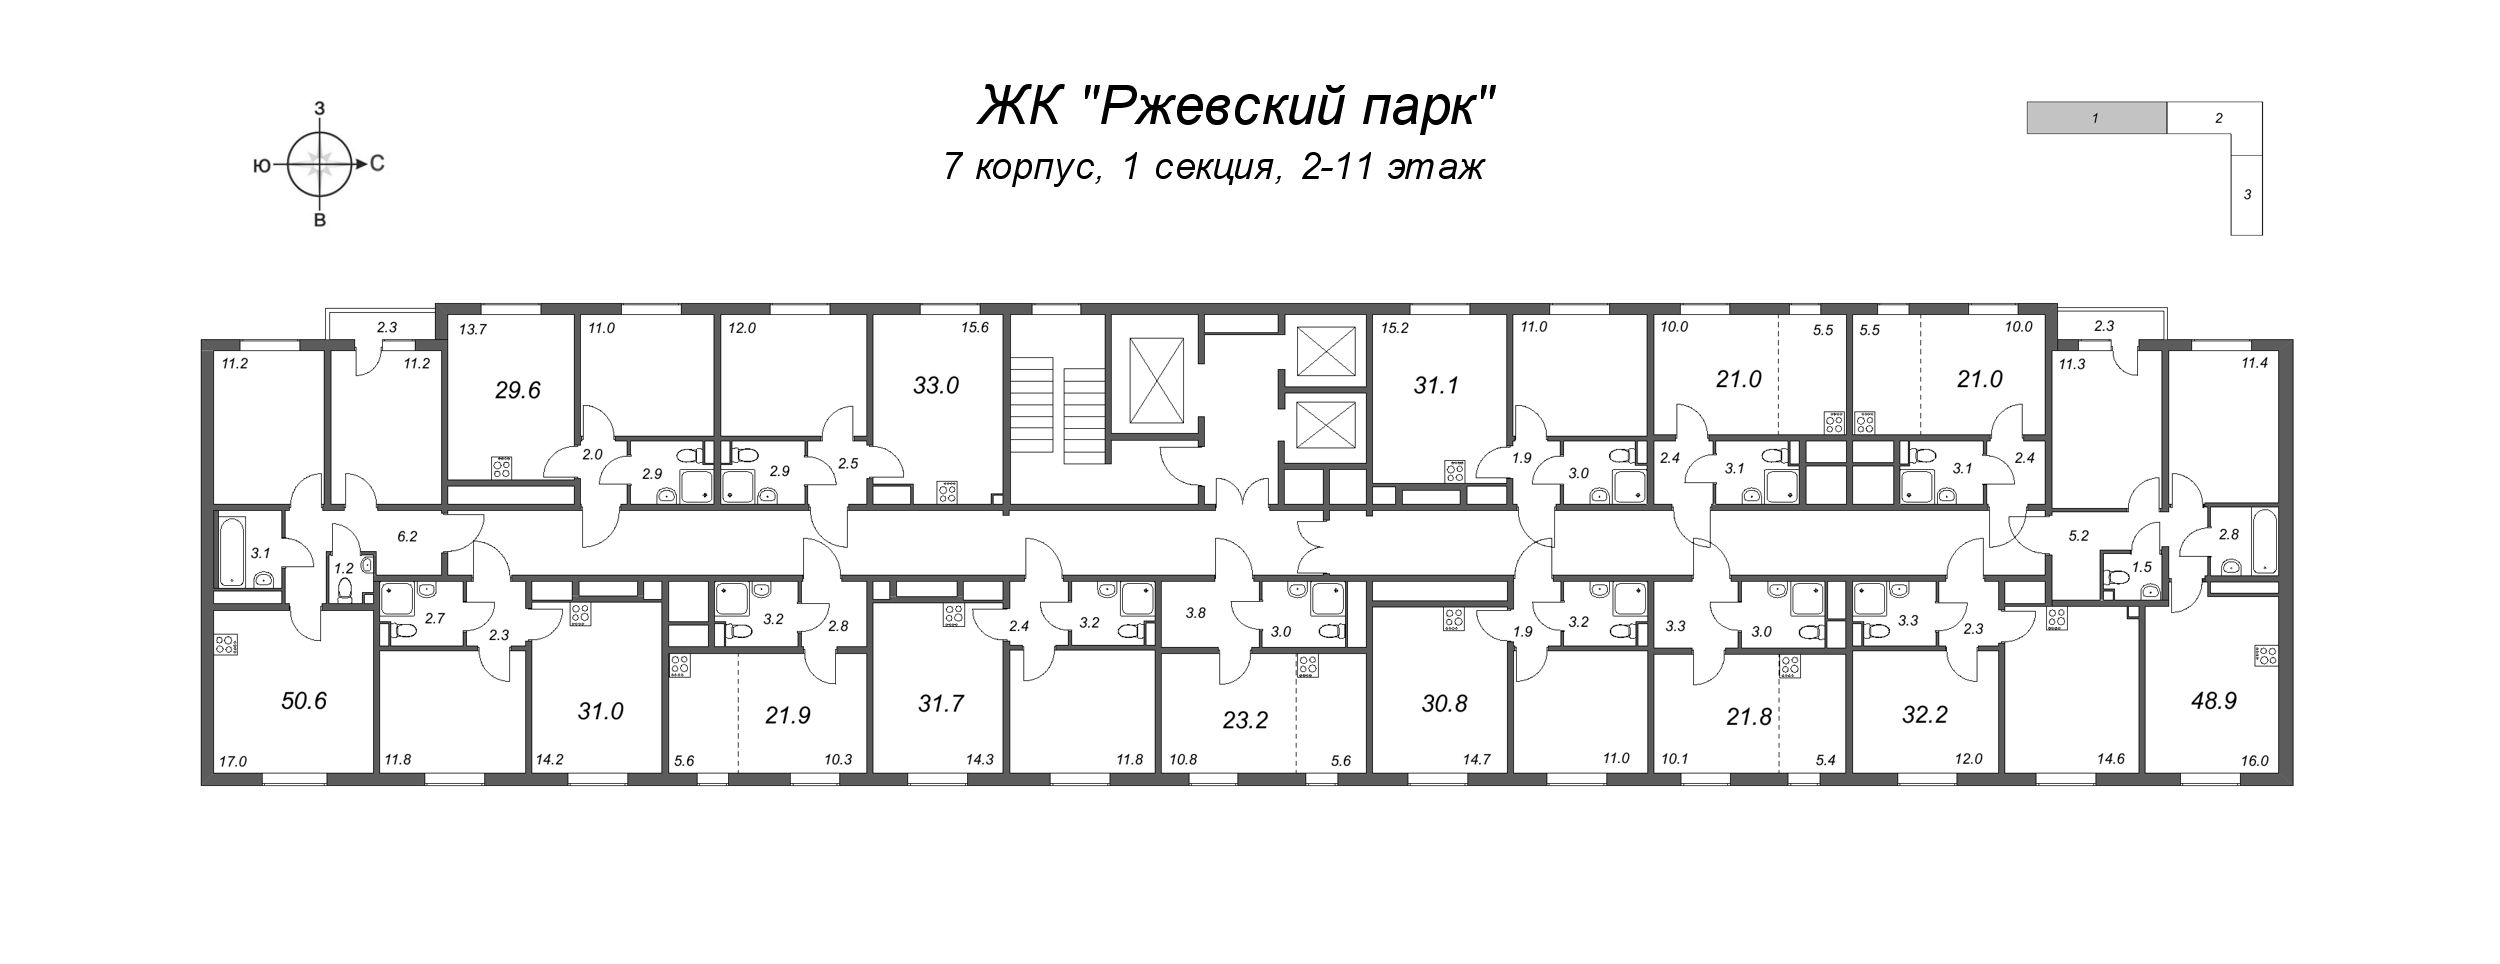 2-комнатная (Евро) квартира, 31.1 м² - планировка этажа